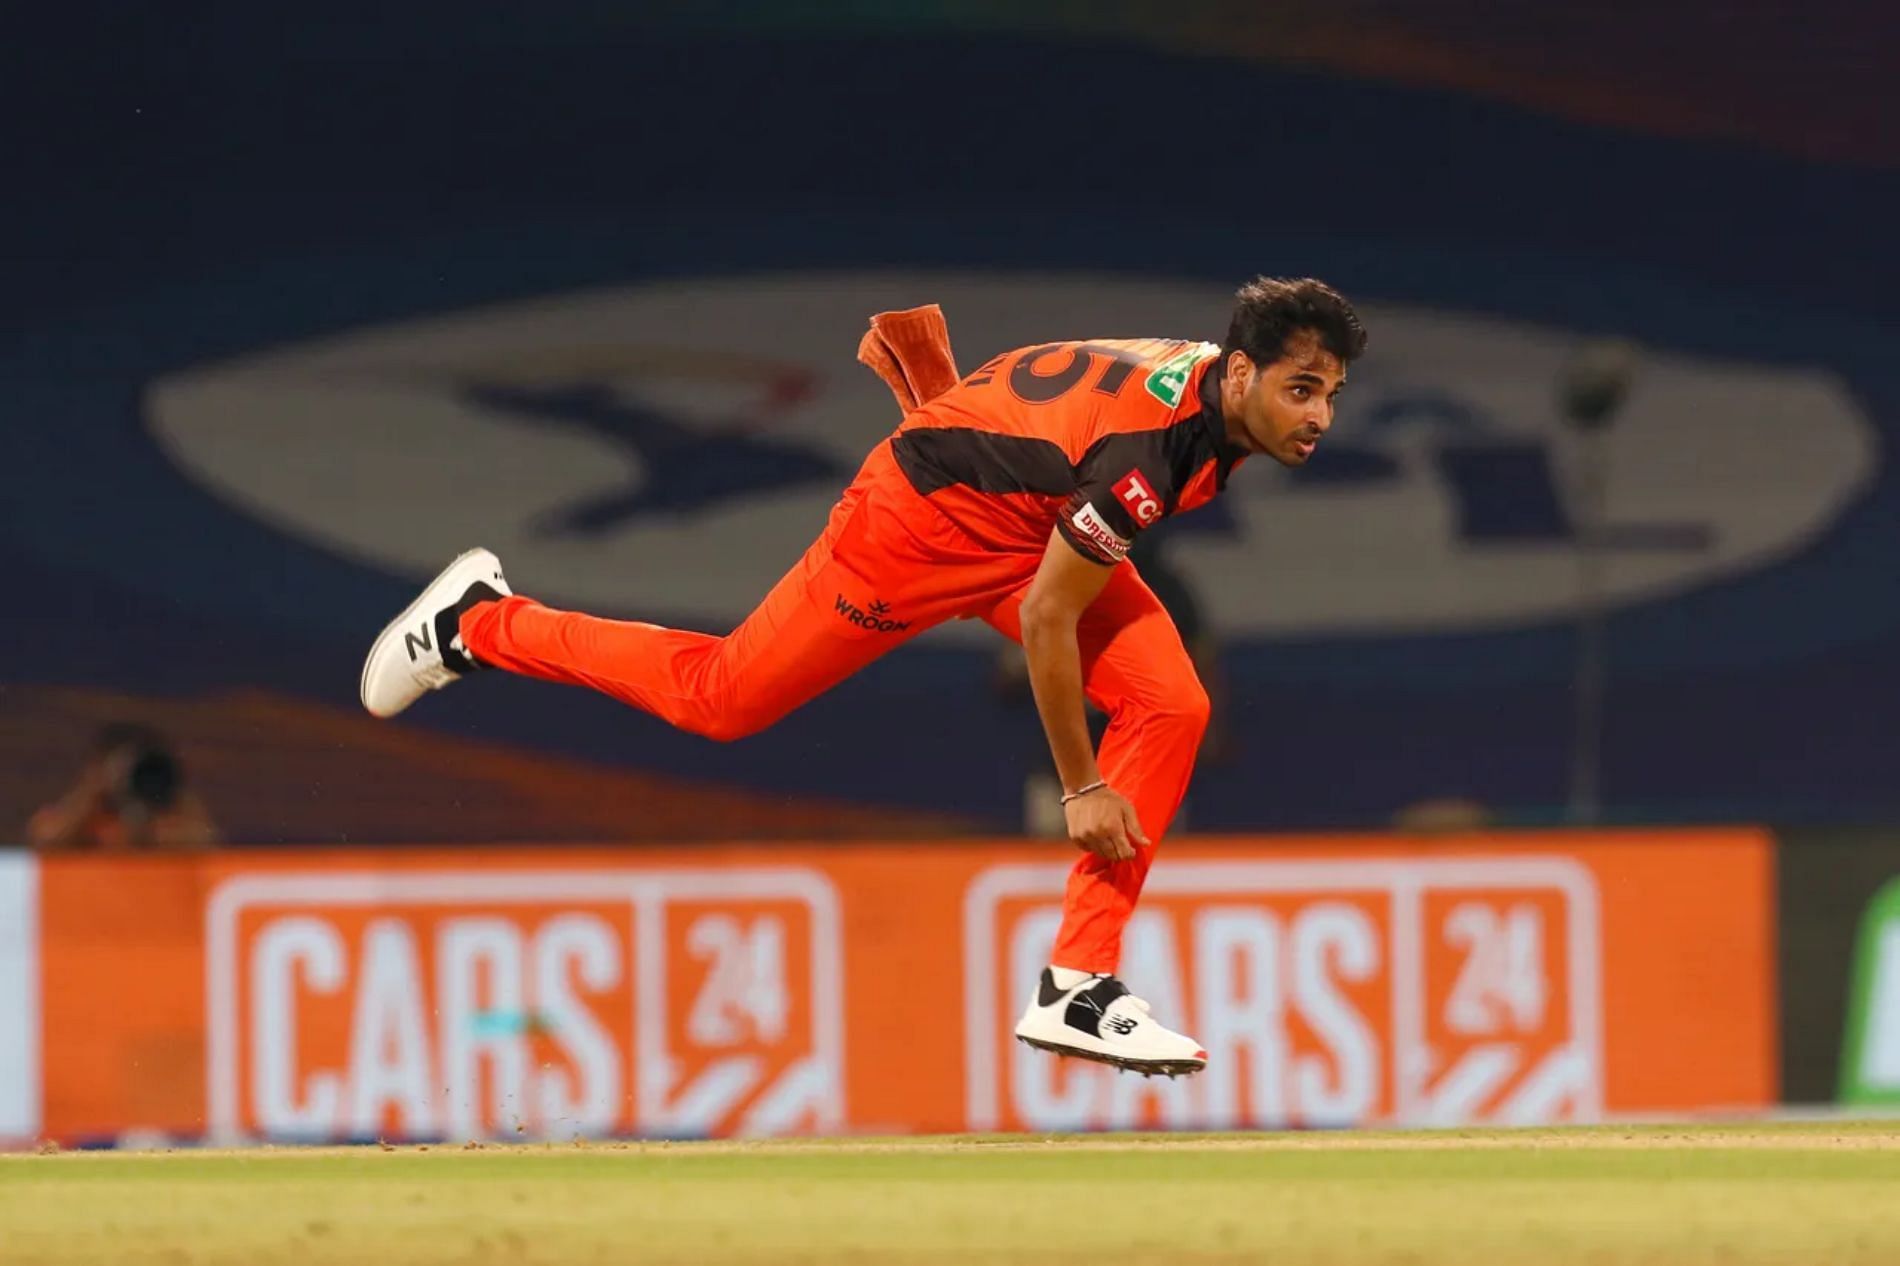 IPL 2022: Aakash Chopra impressed with senior SRH pacer's performance - “ Bhuvneshwar Kumar is slipping under the radar”